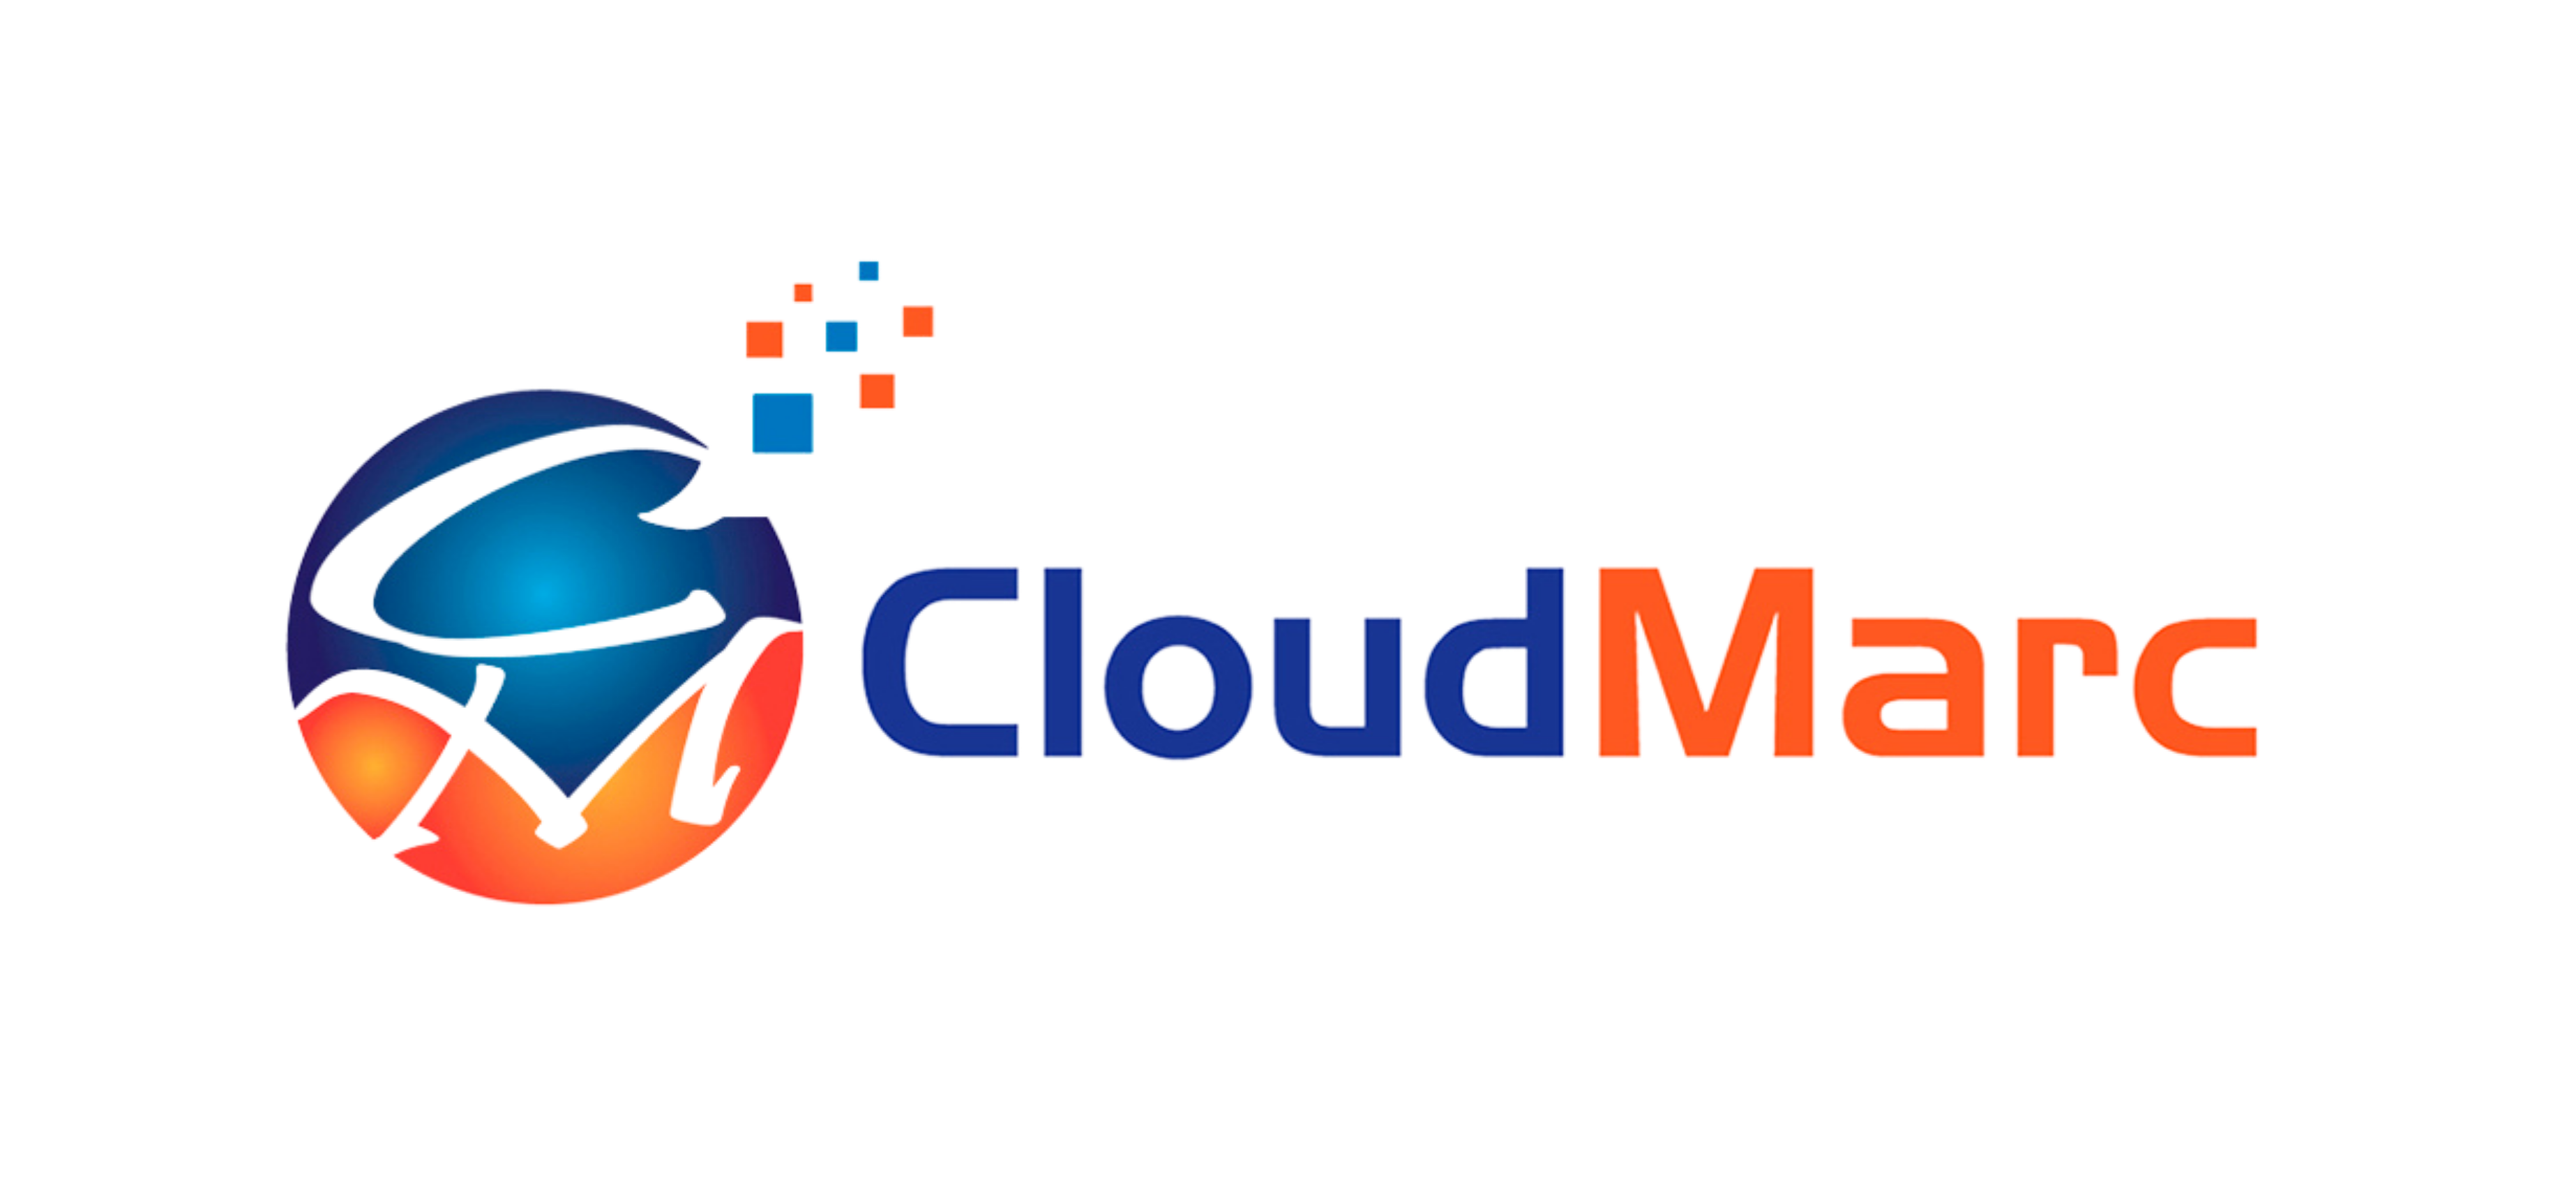 Cloudmarc